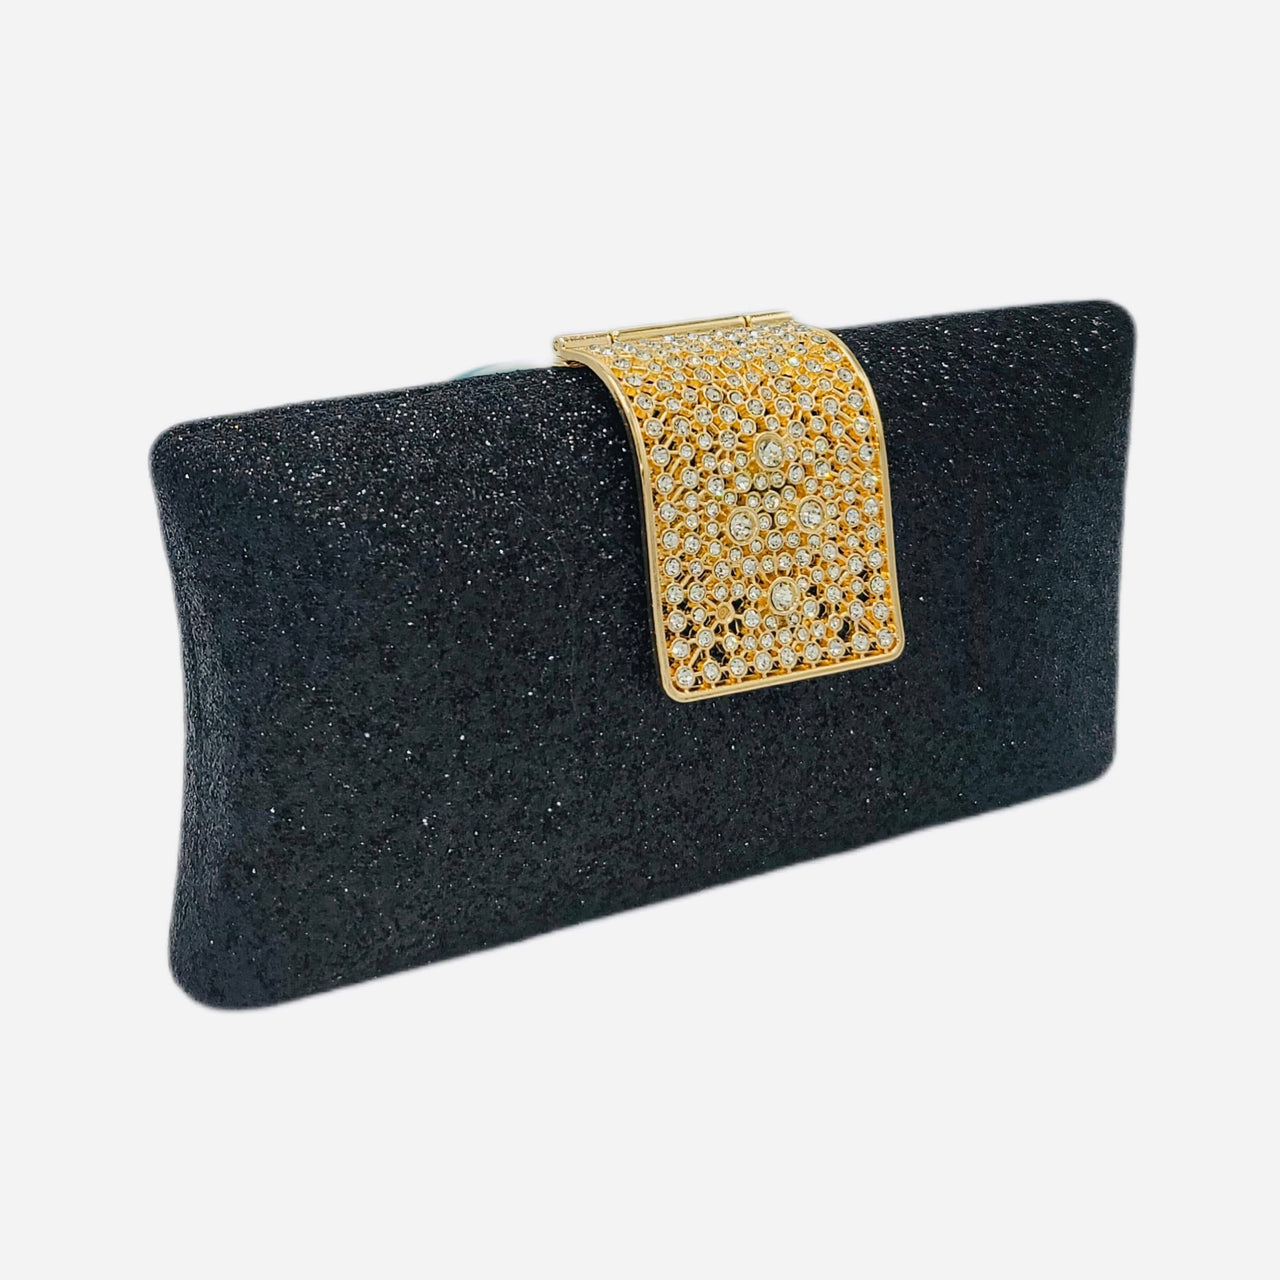 The Bag Couture Handbags, Wallets & Cases Fancy Clutch 1 Black